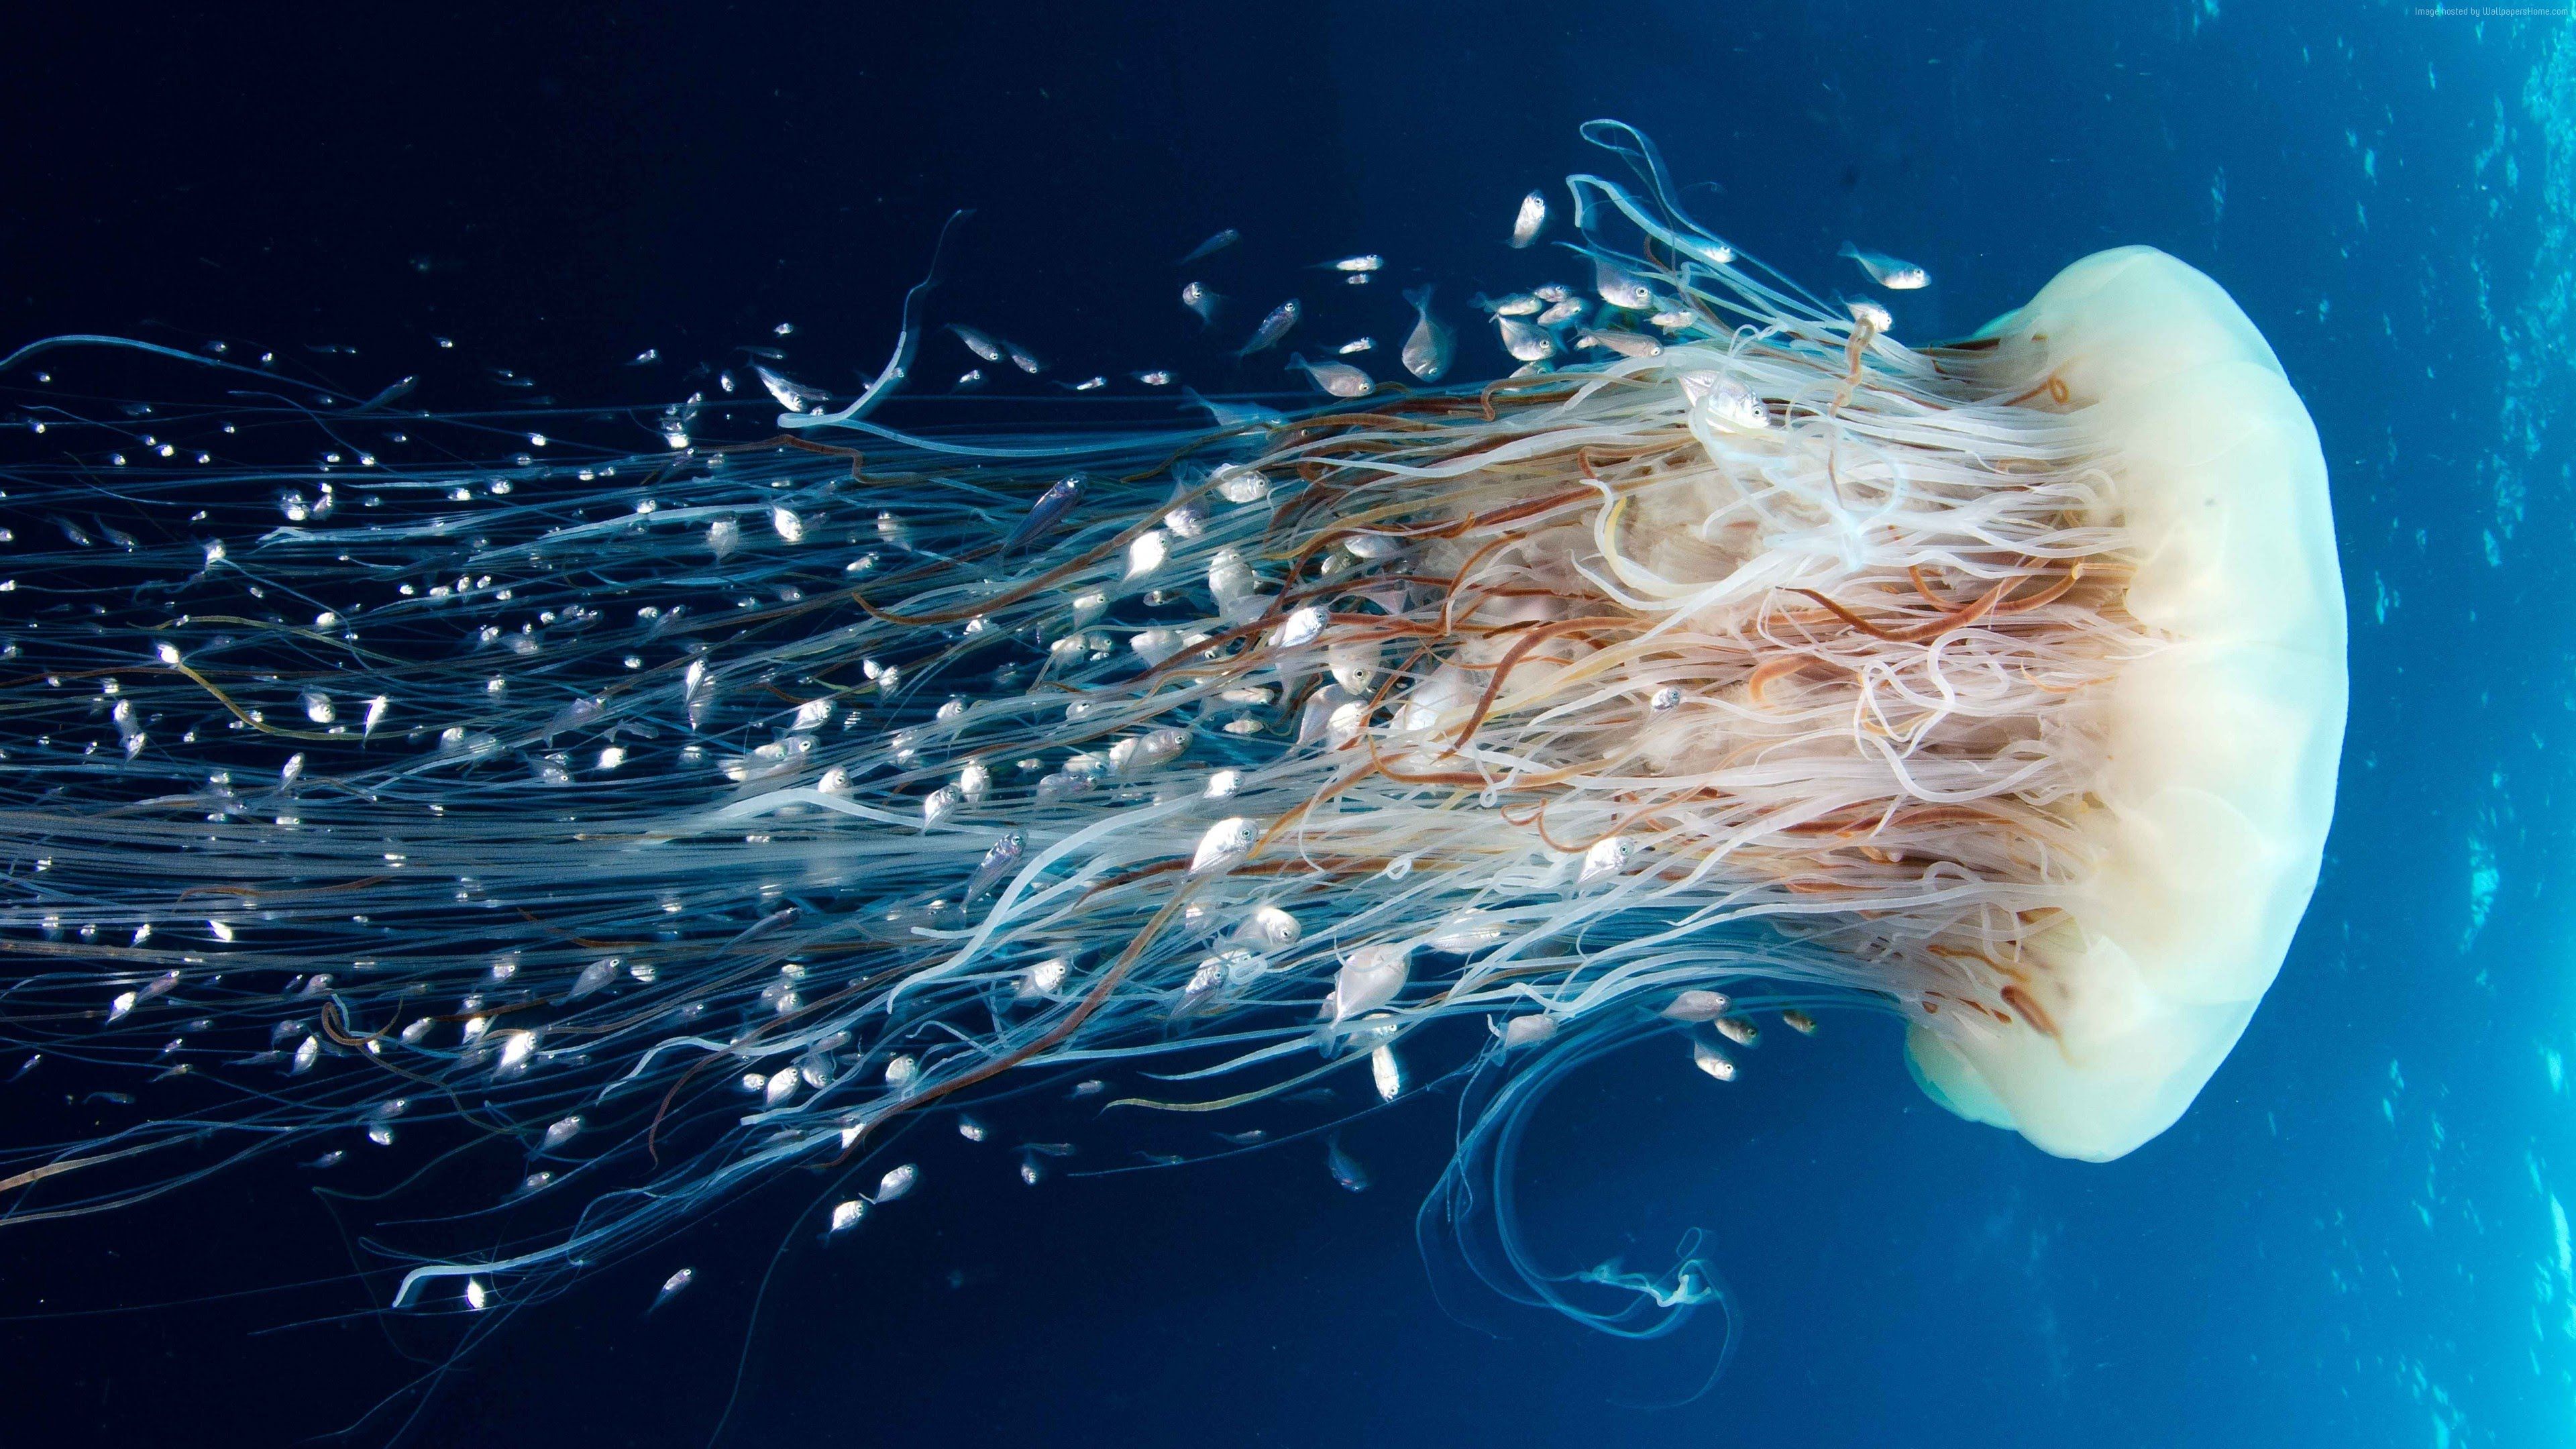 Download Beautiful And Amazing Aquatic Life Wallpaper. UHD 4k